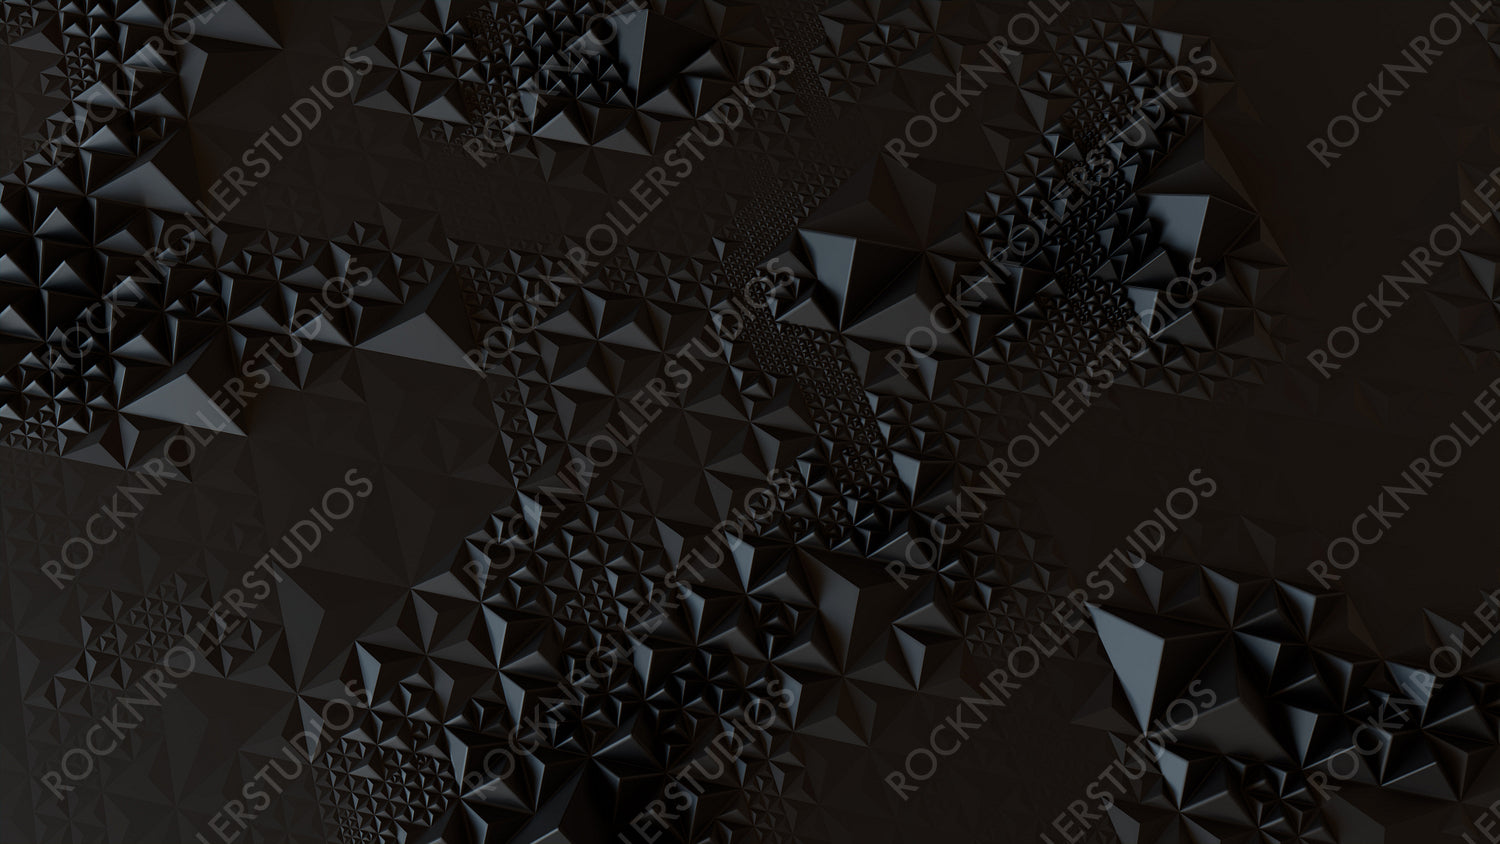 Dark High Tech Surface with Triangular Pyramids. Black, Abstract 3d Texture.